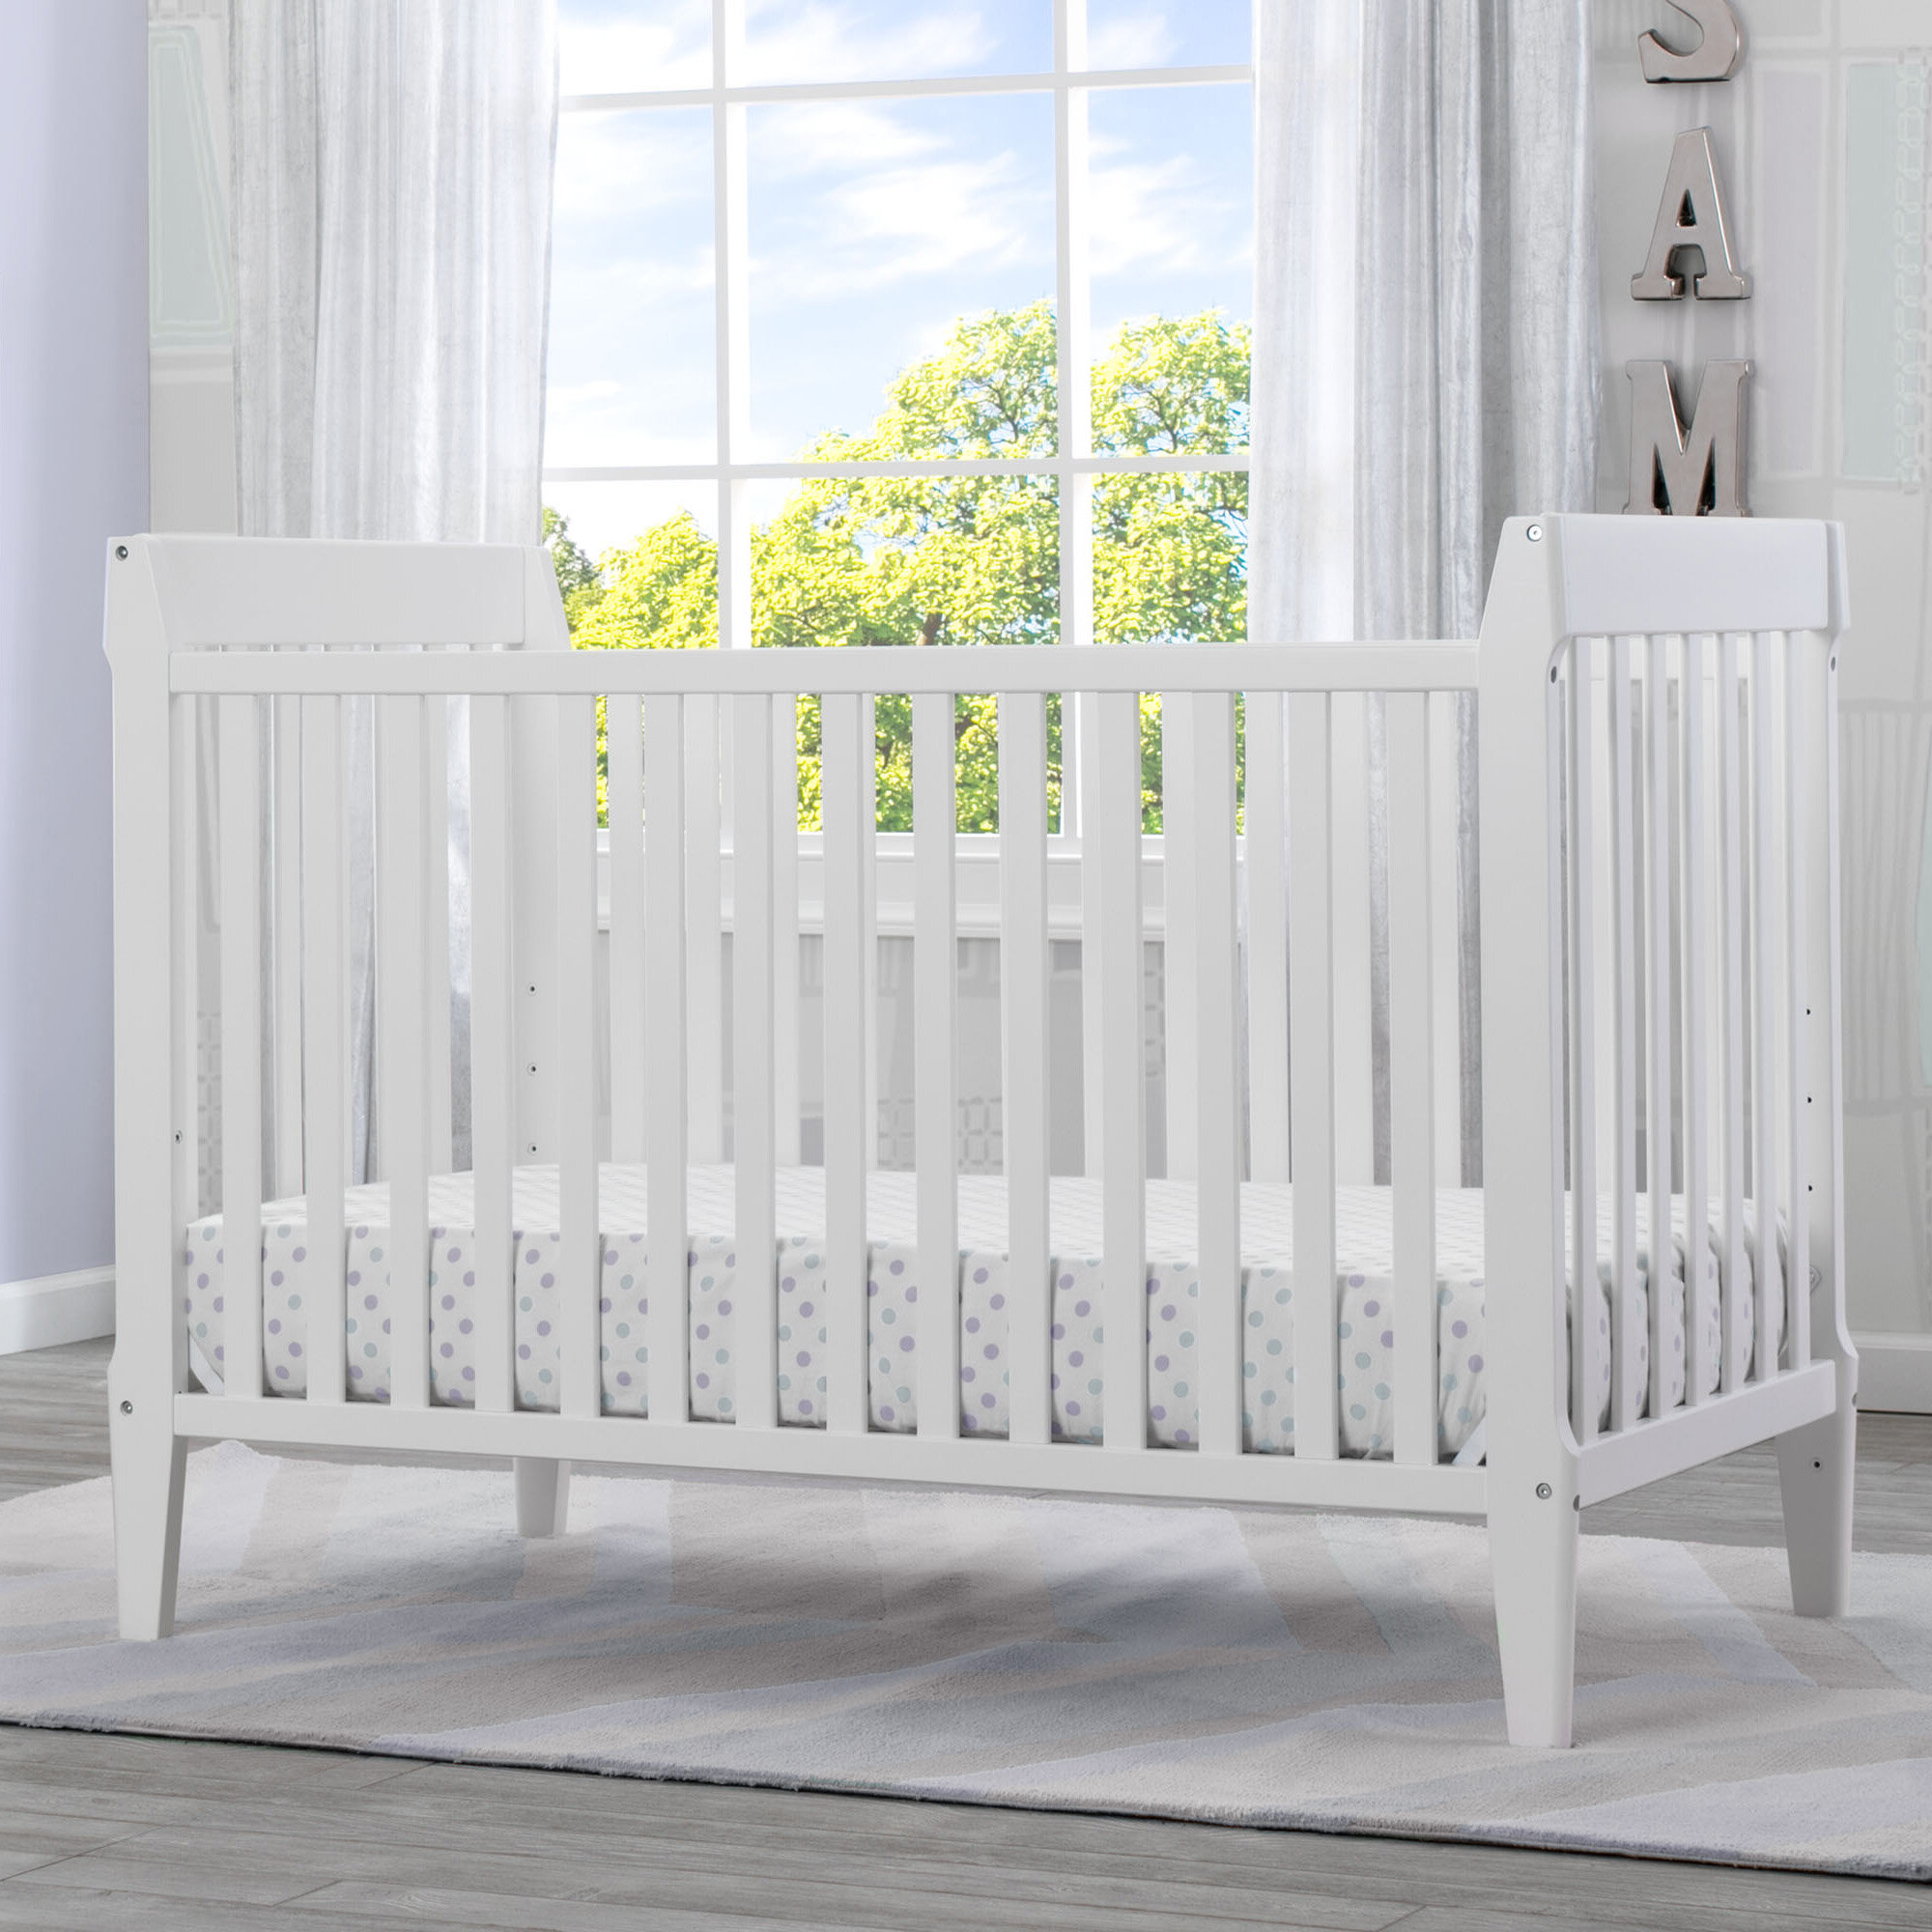 white mid century crib